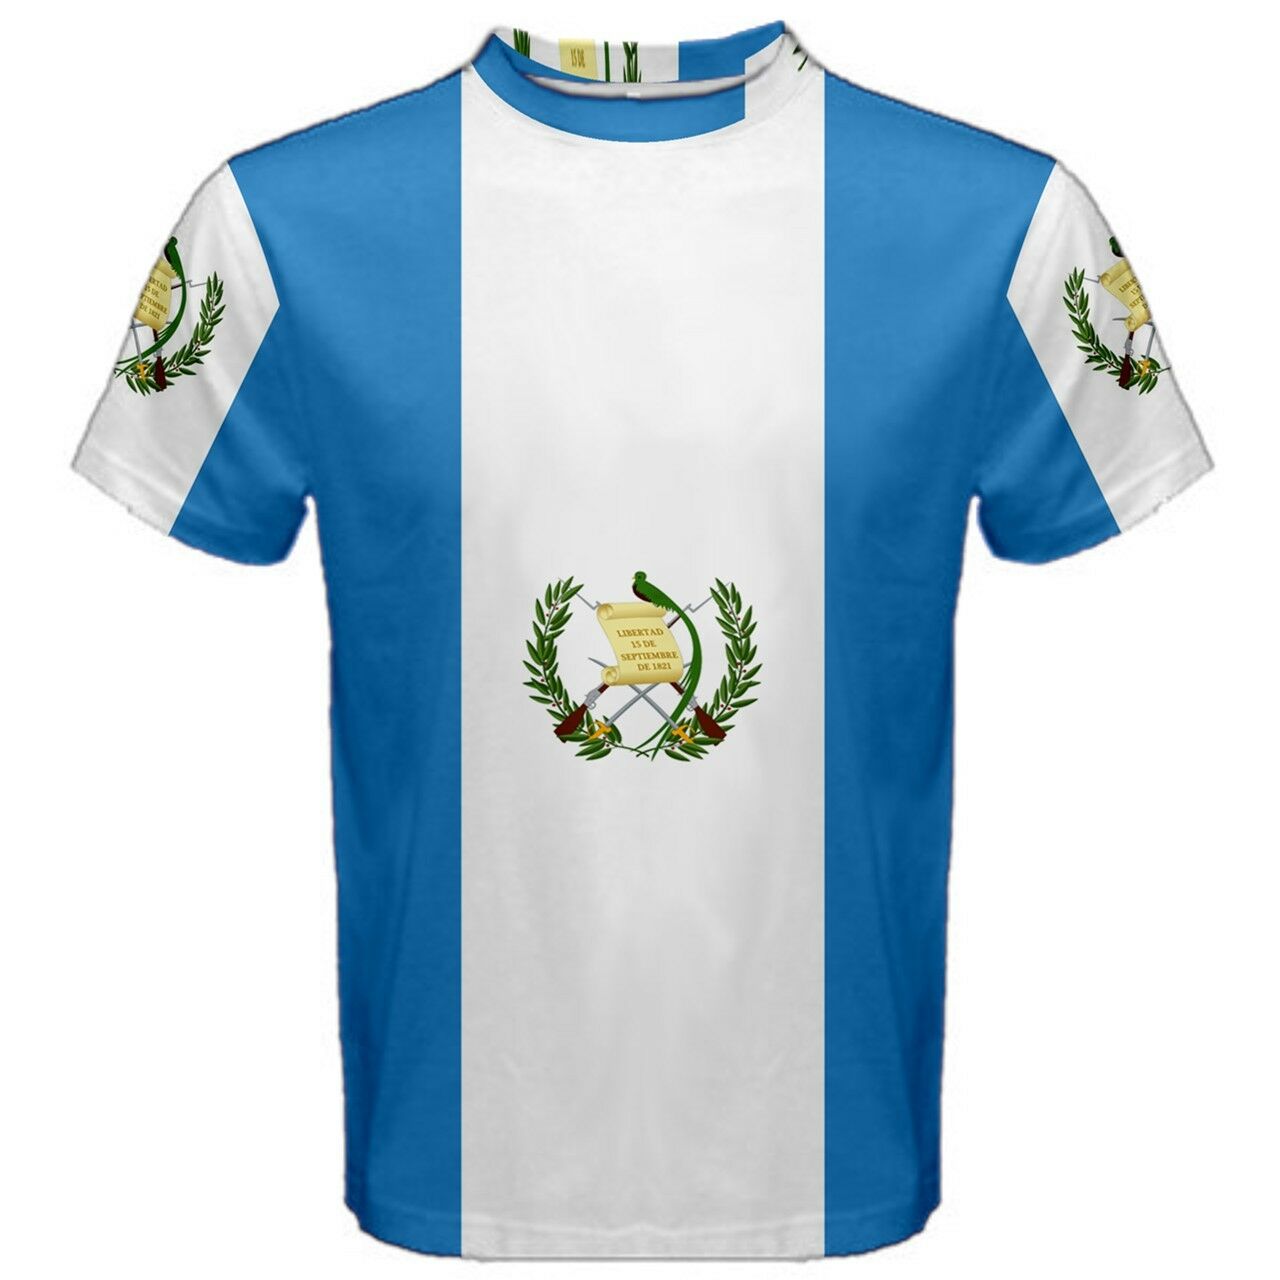 Guatemala Flag Sublimated Sports Jersey (Kids)